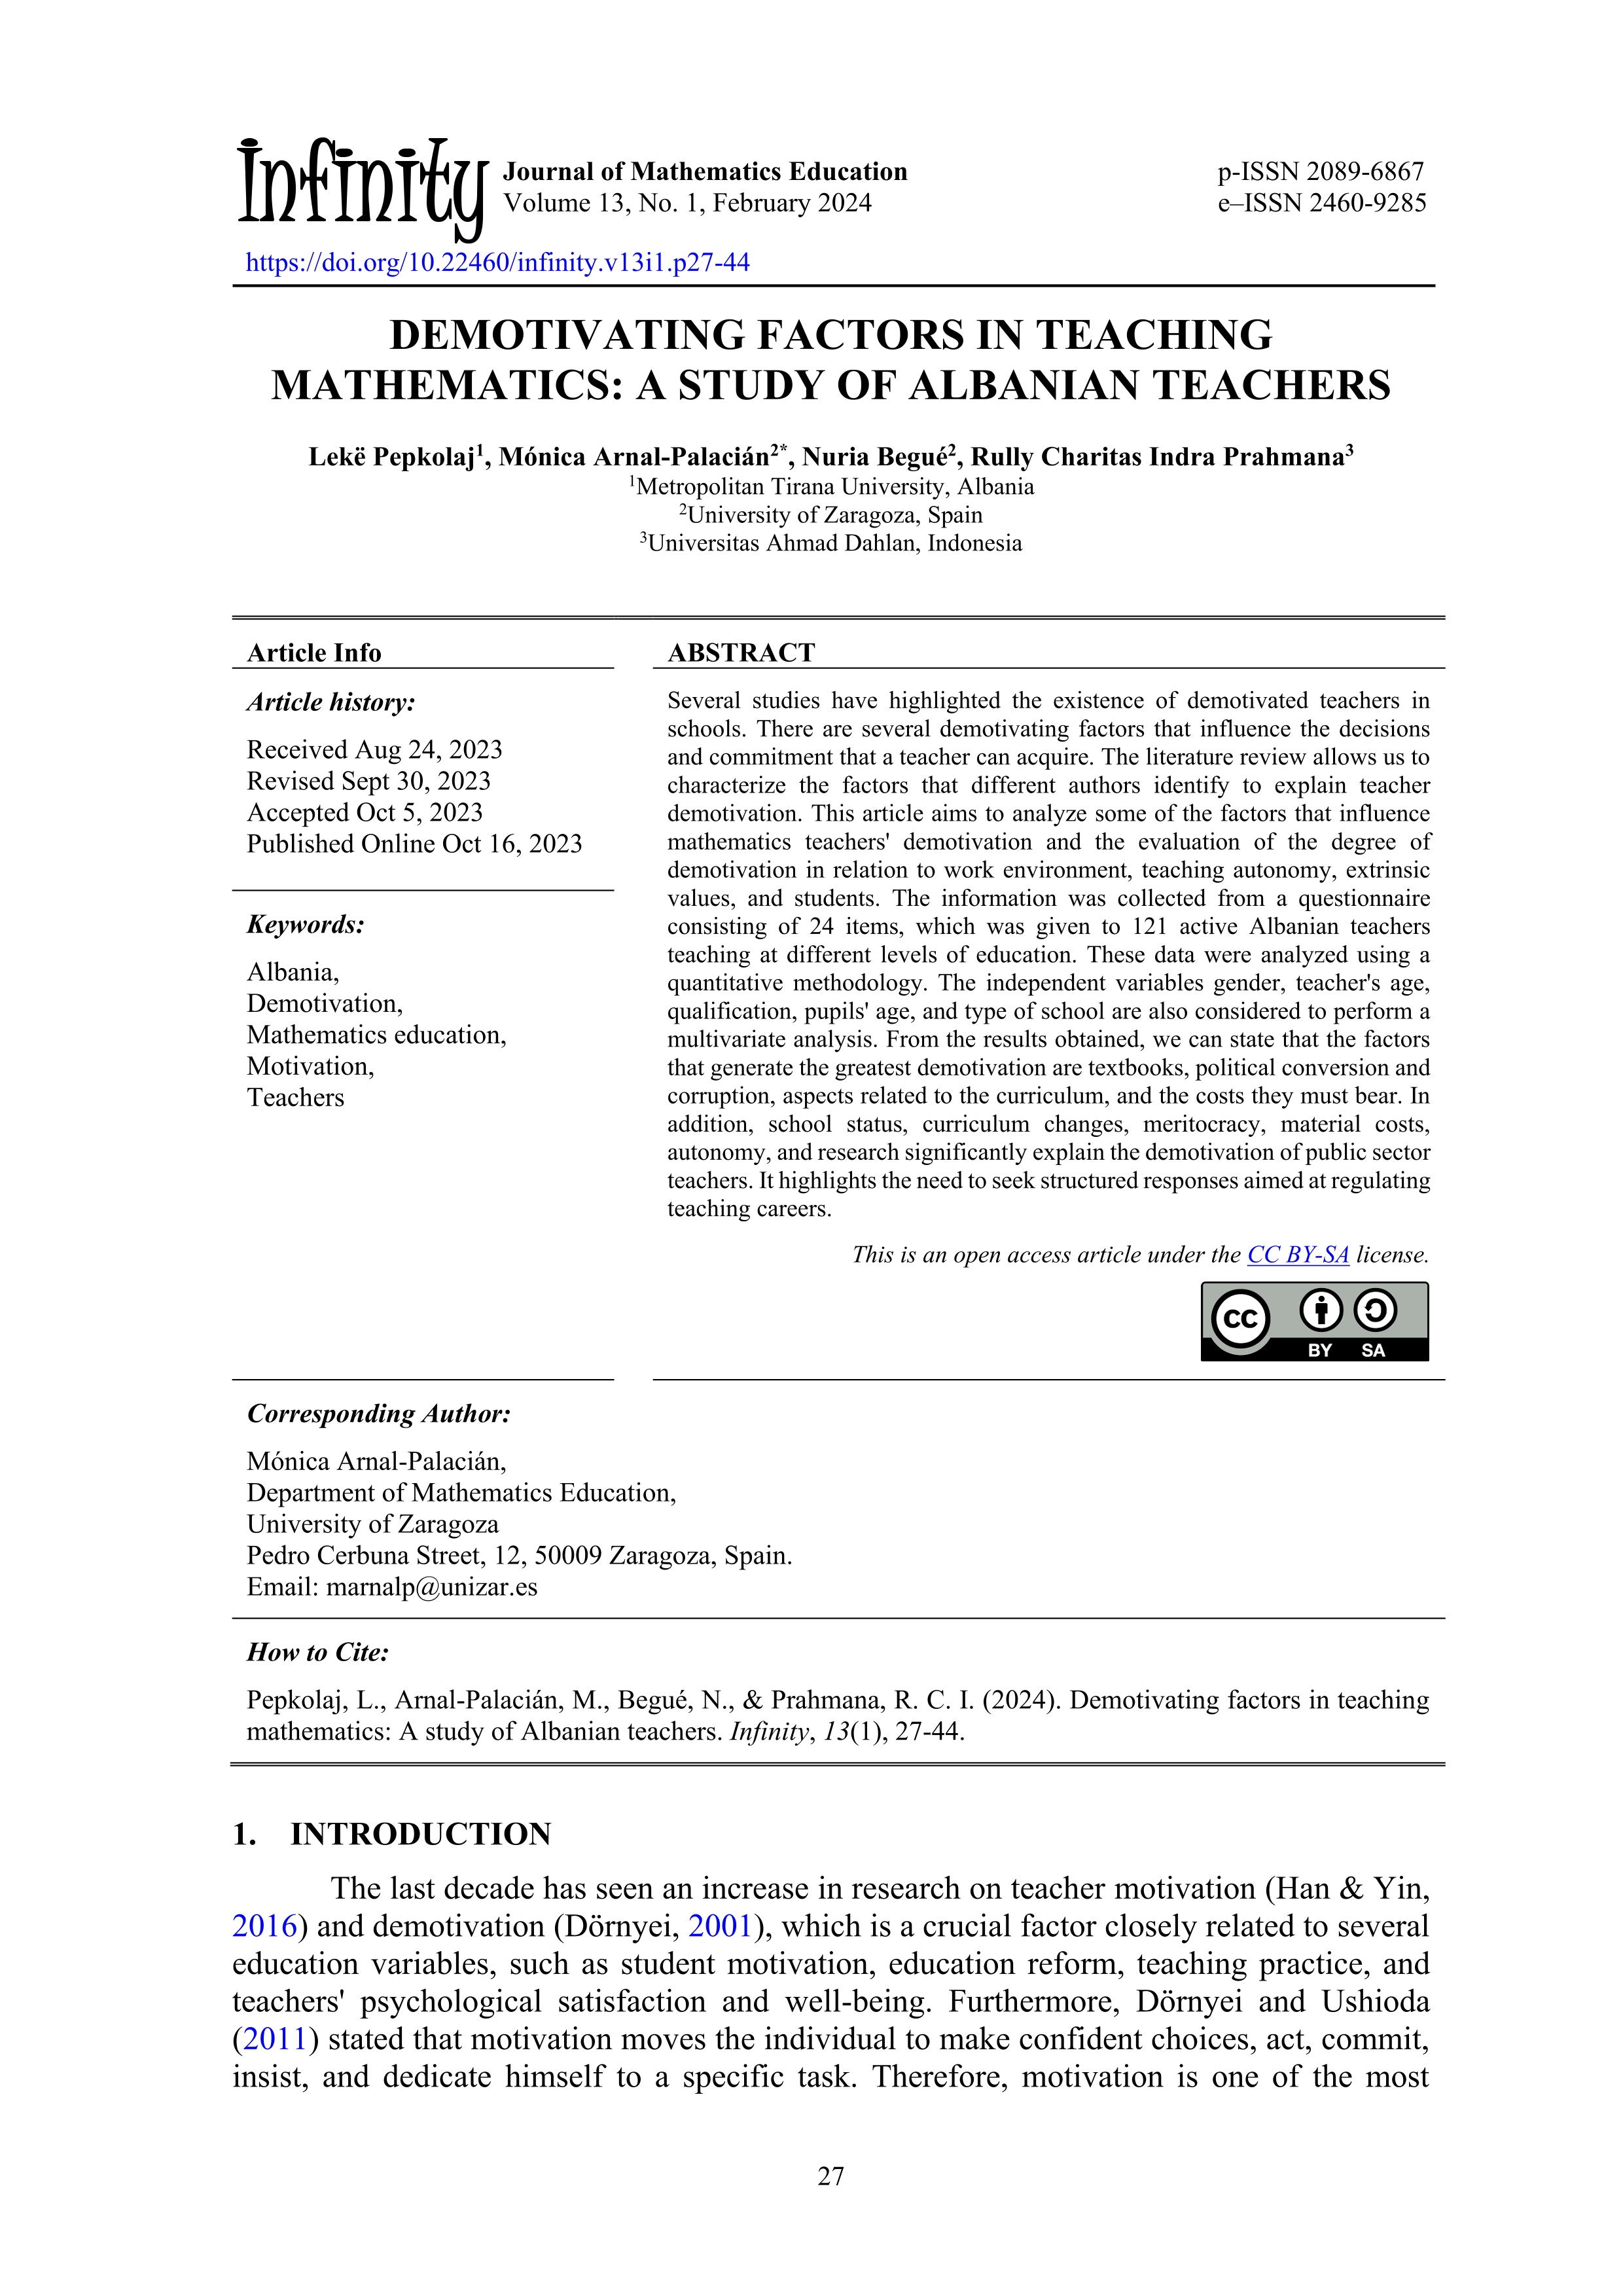 Demotivating factors in teaching mathematics: a study of Albanian teachers